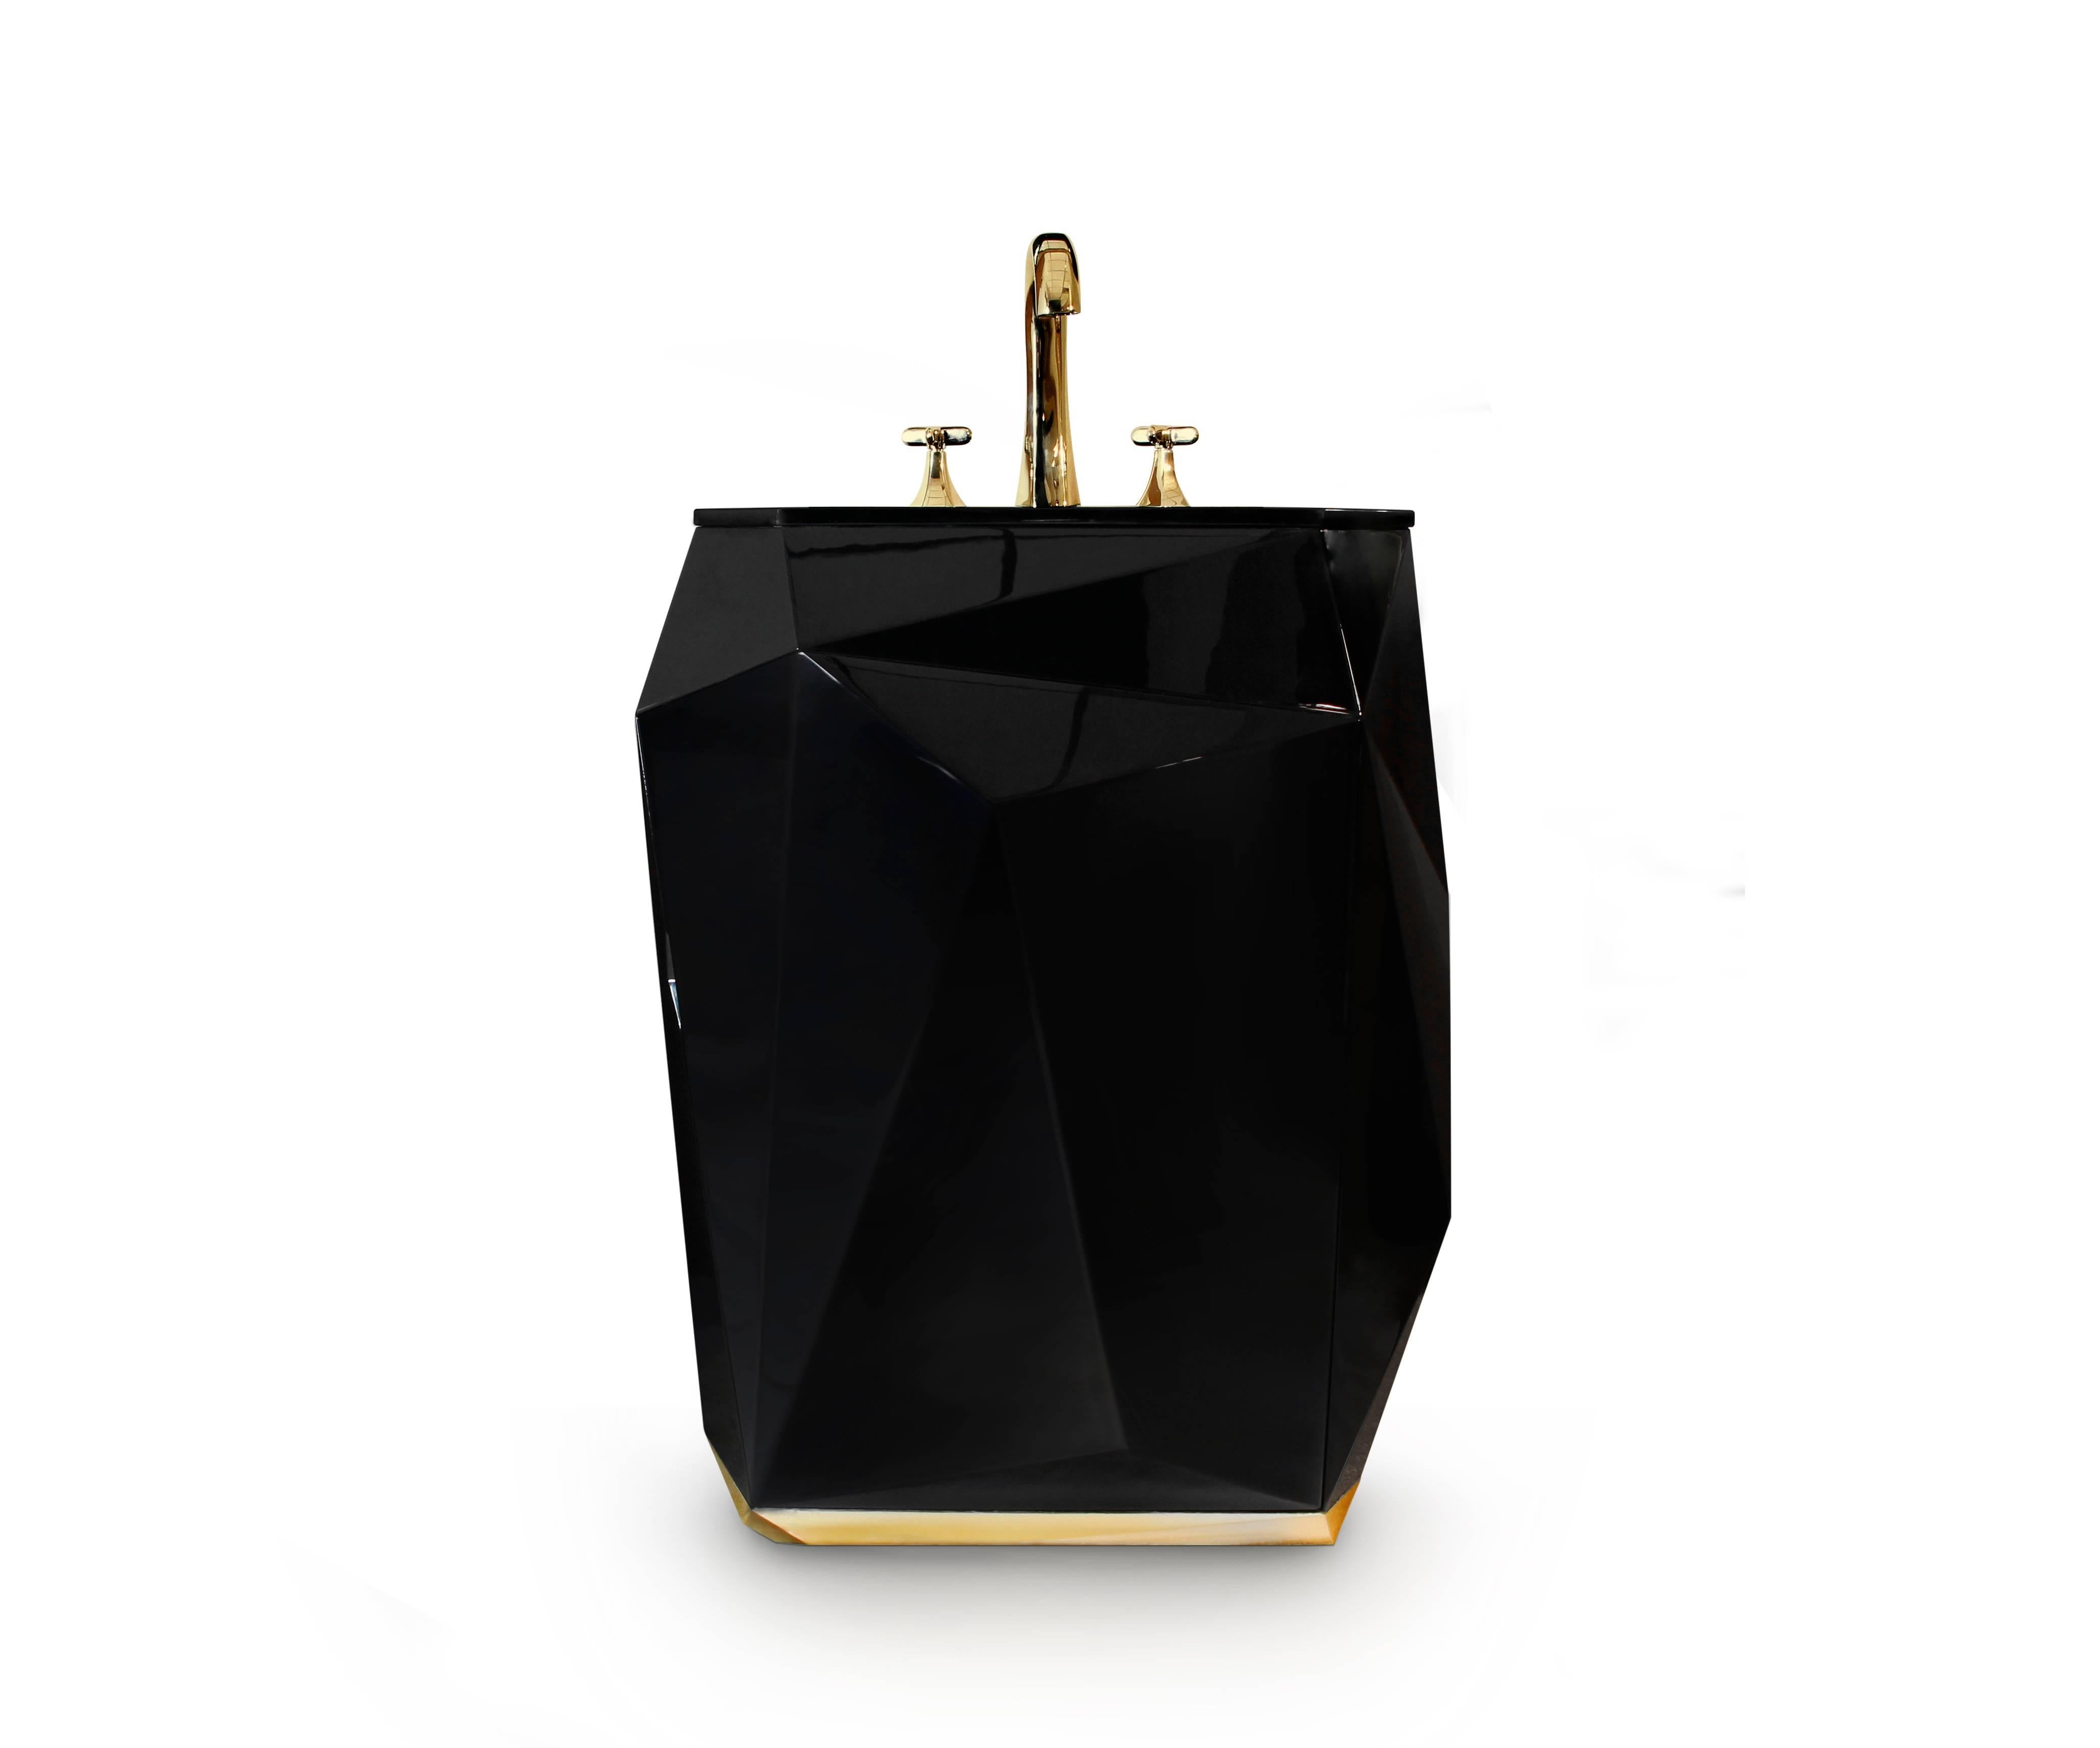 Portuguese European Modern Black Varnished Lacquer and Gold Freestanding Wash Basin Sink For Sale